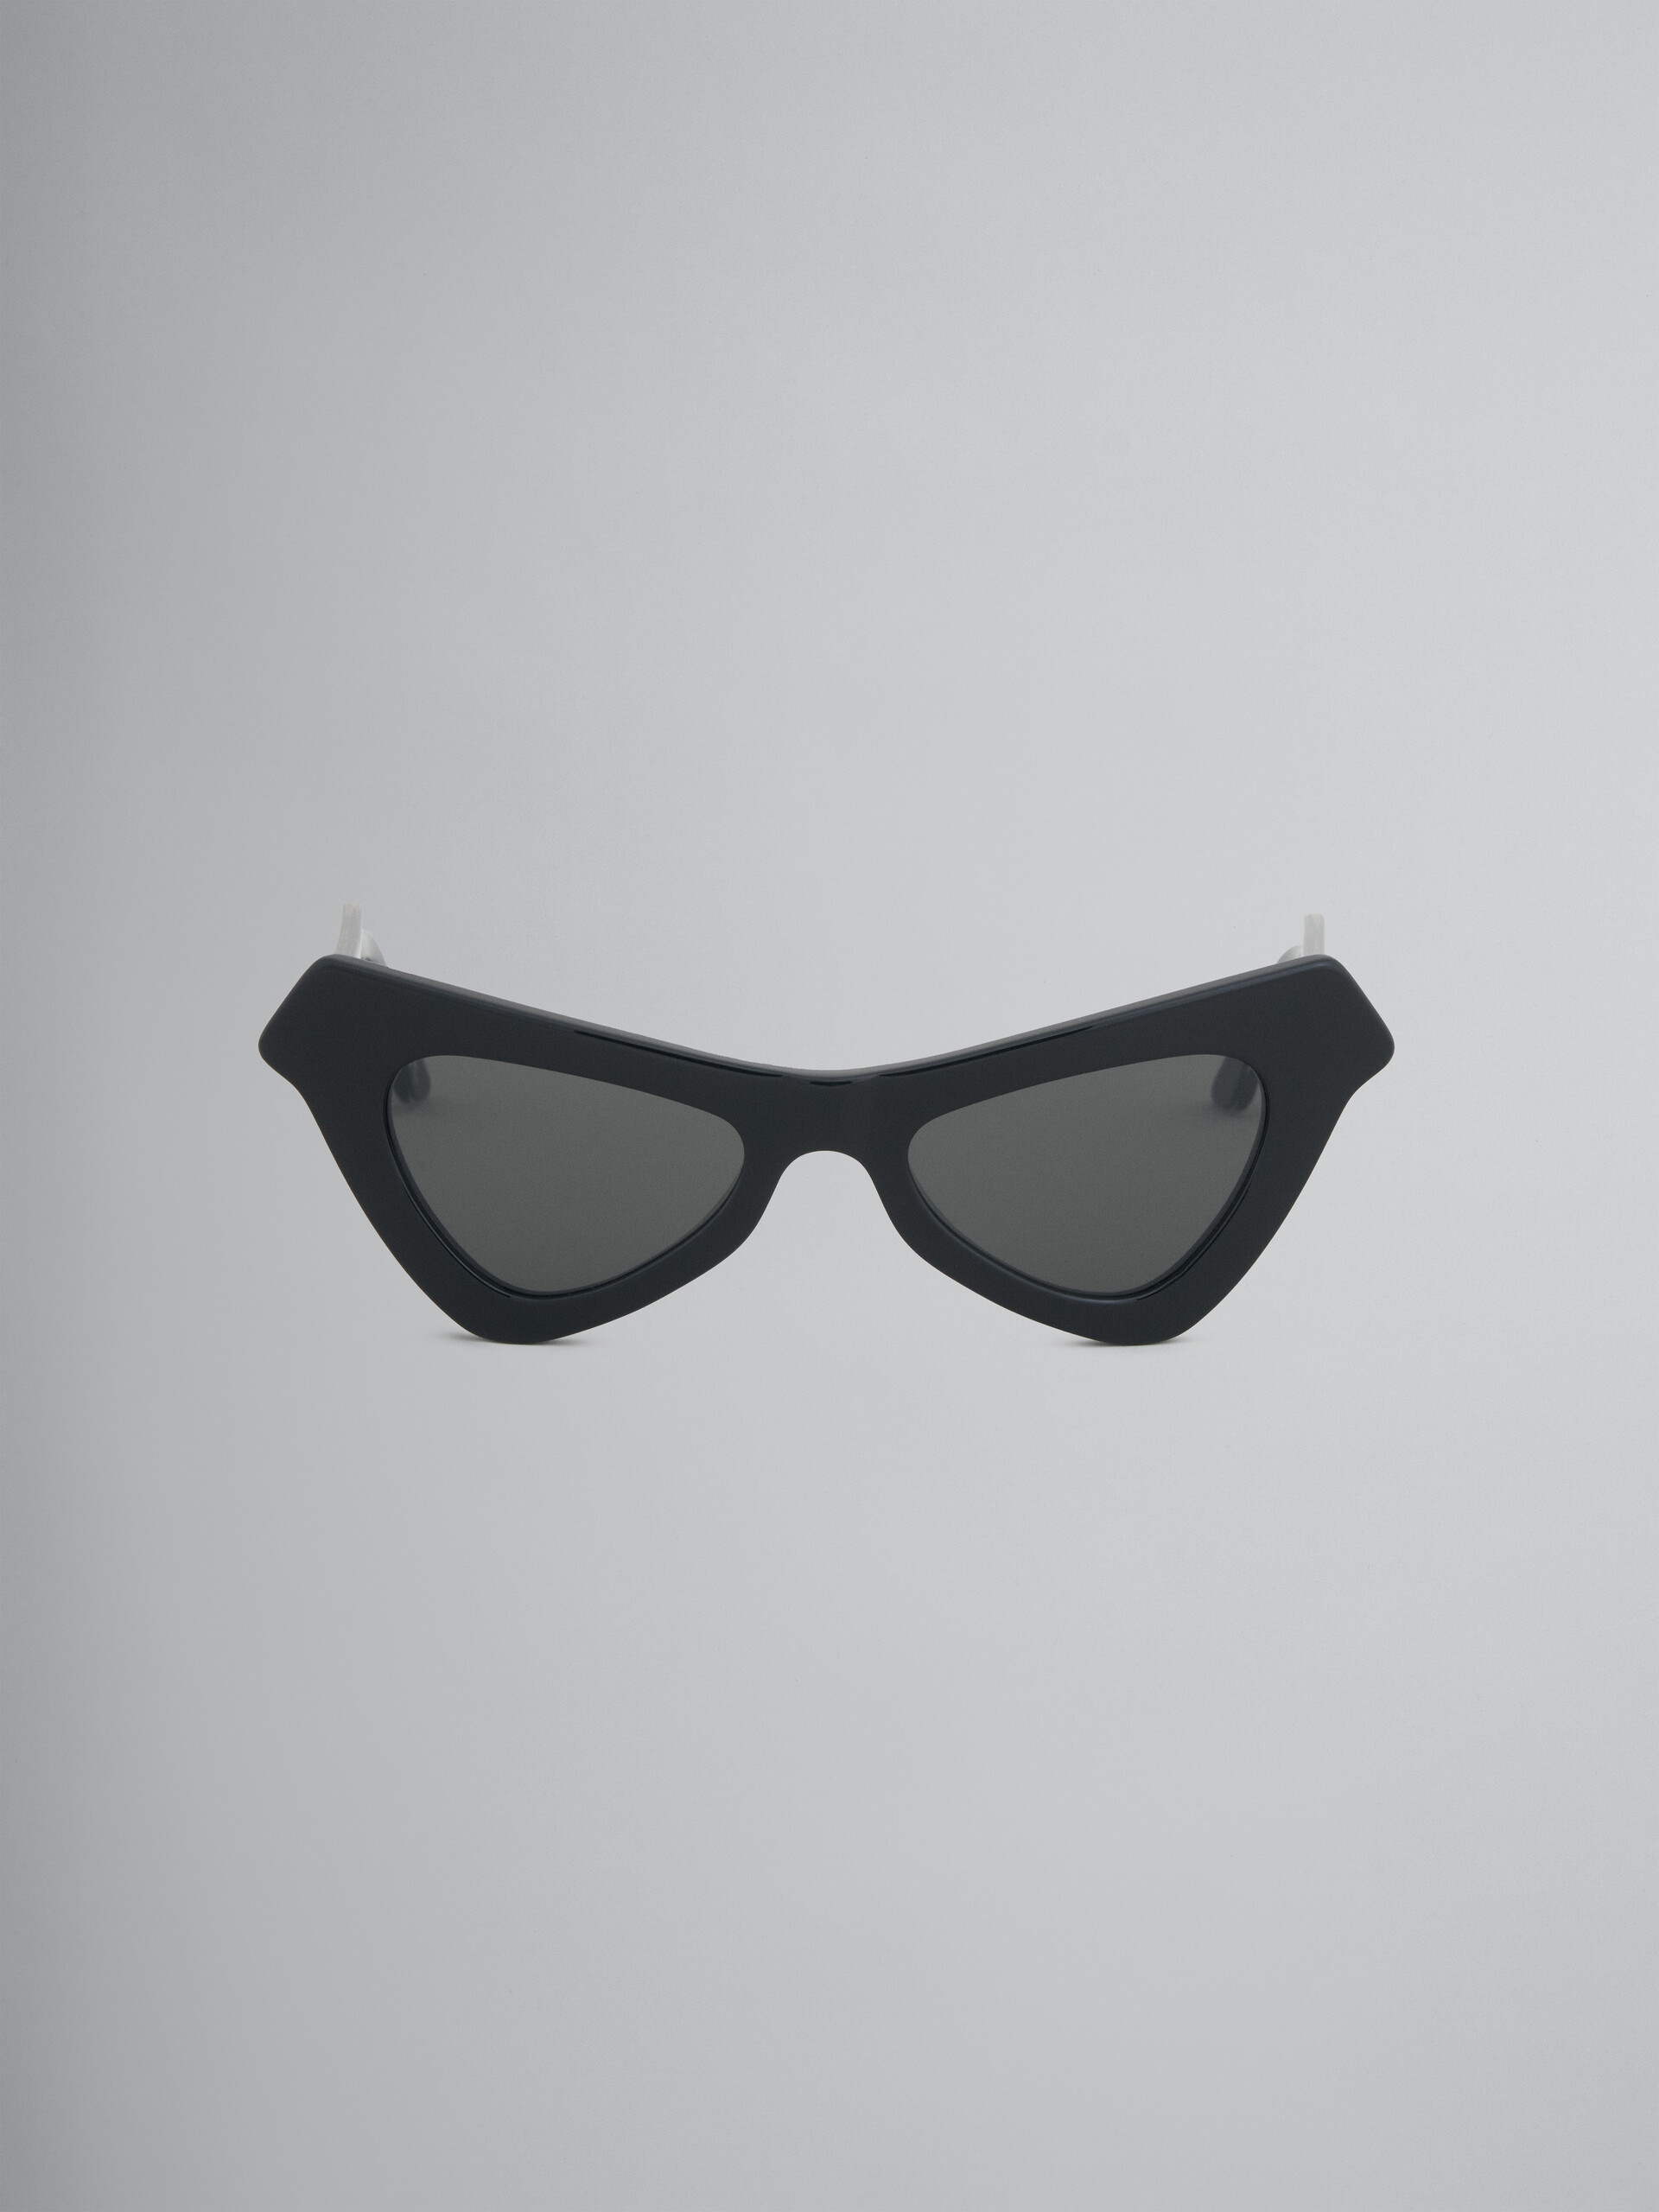 Black acetate FAIRY POOL sunglasses - Optical - Image 1